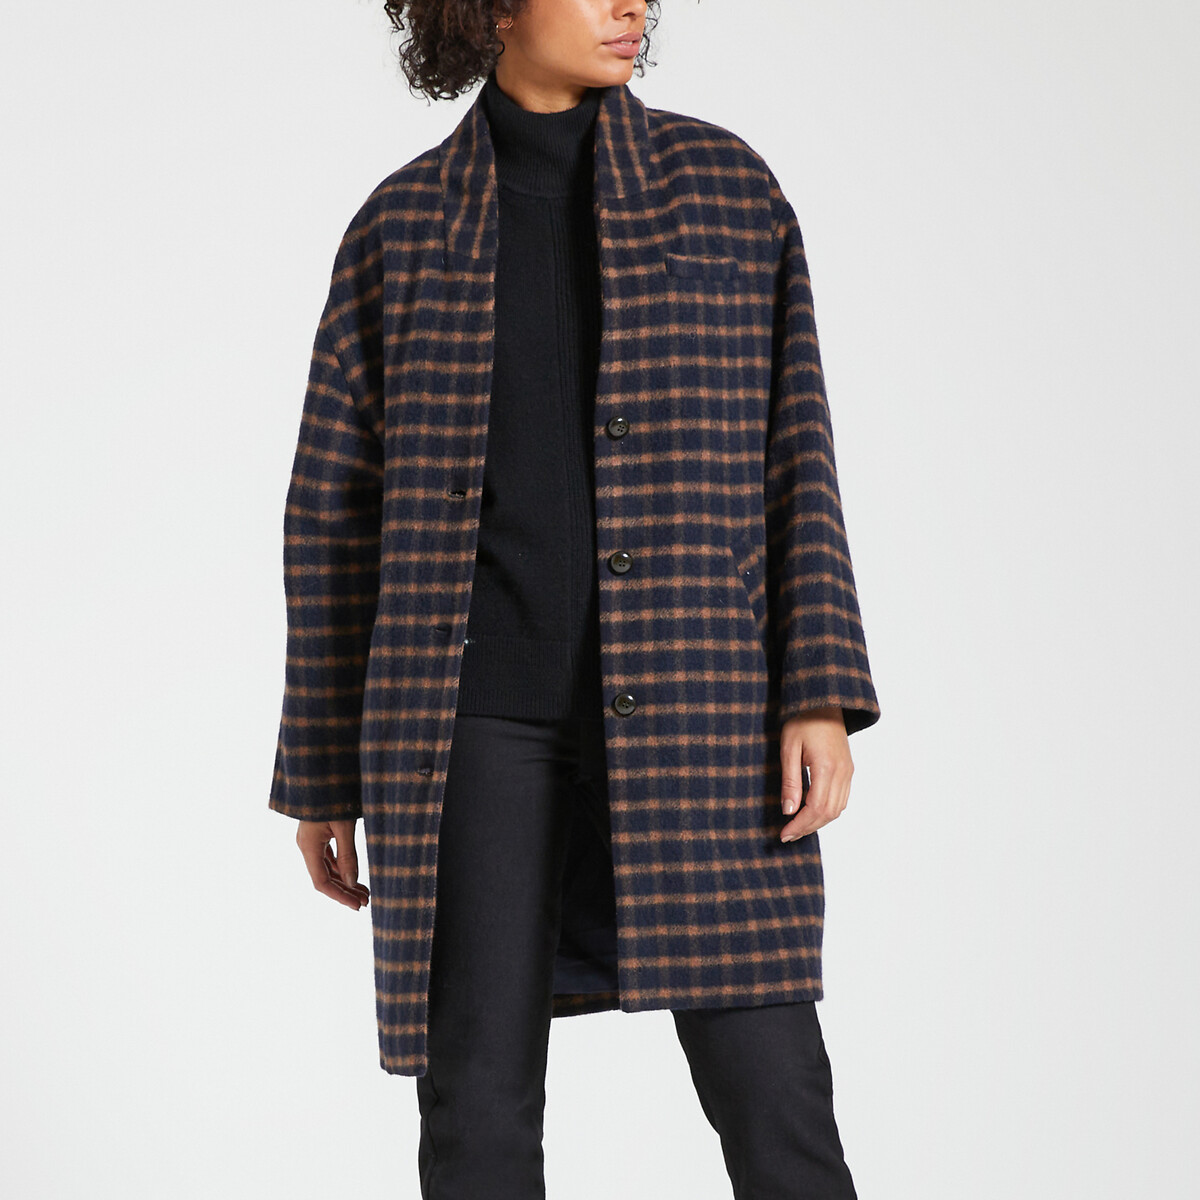 Nelita Paula Checked Coat in Wool Mix, Mid-Length